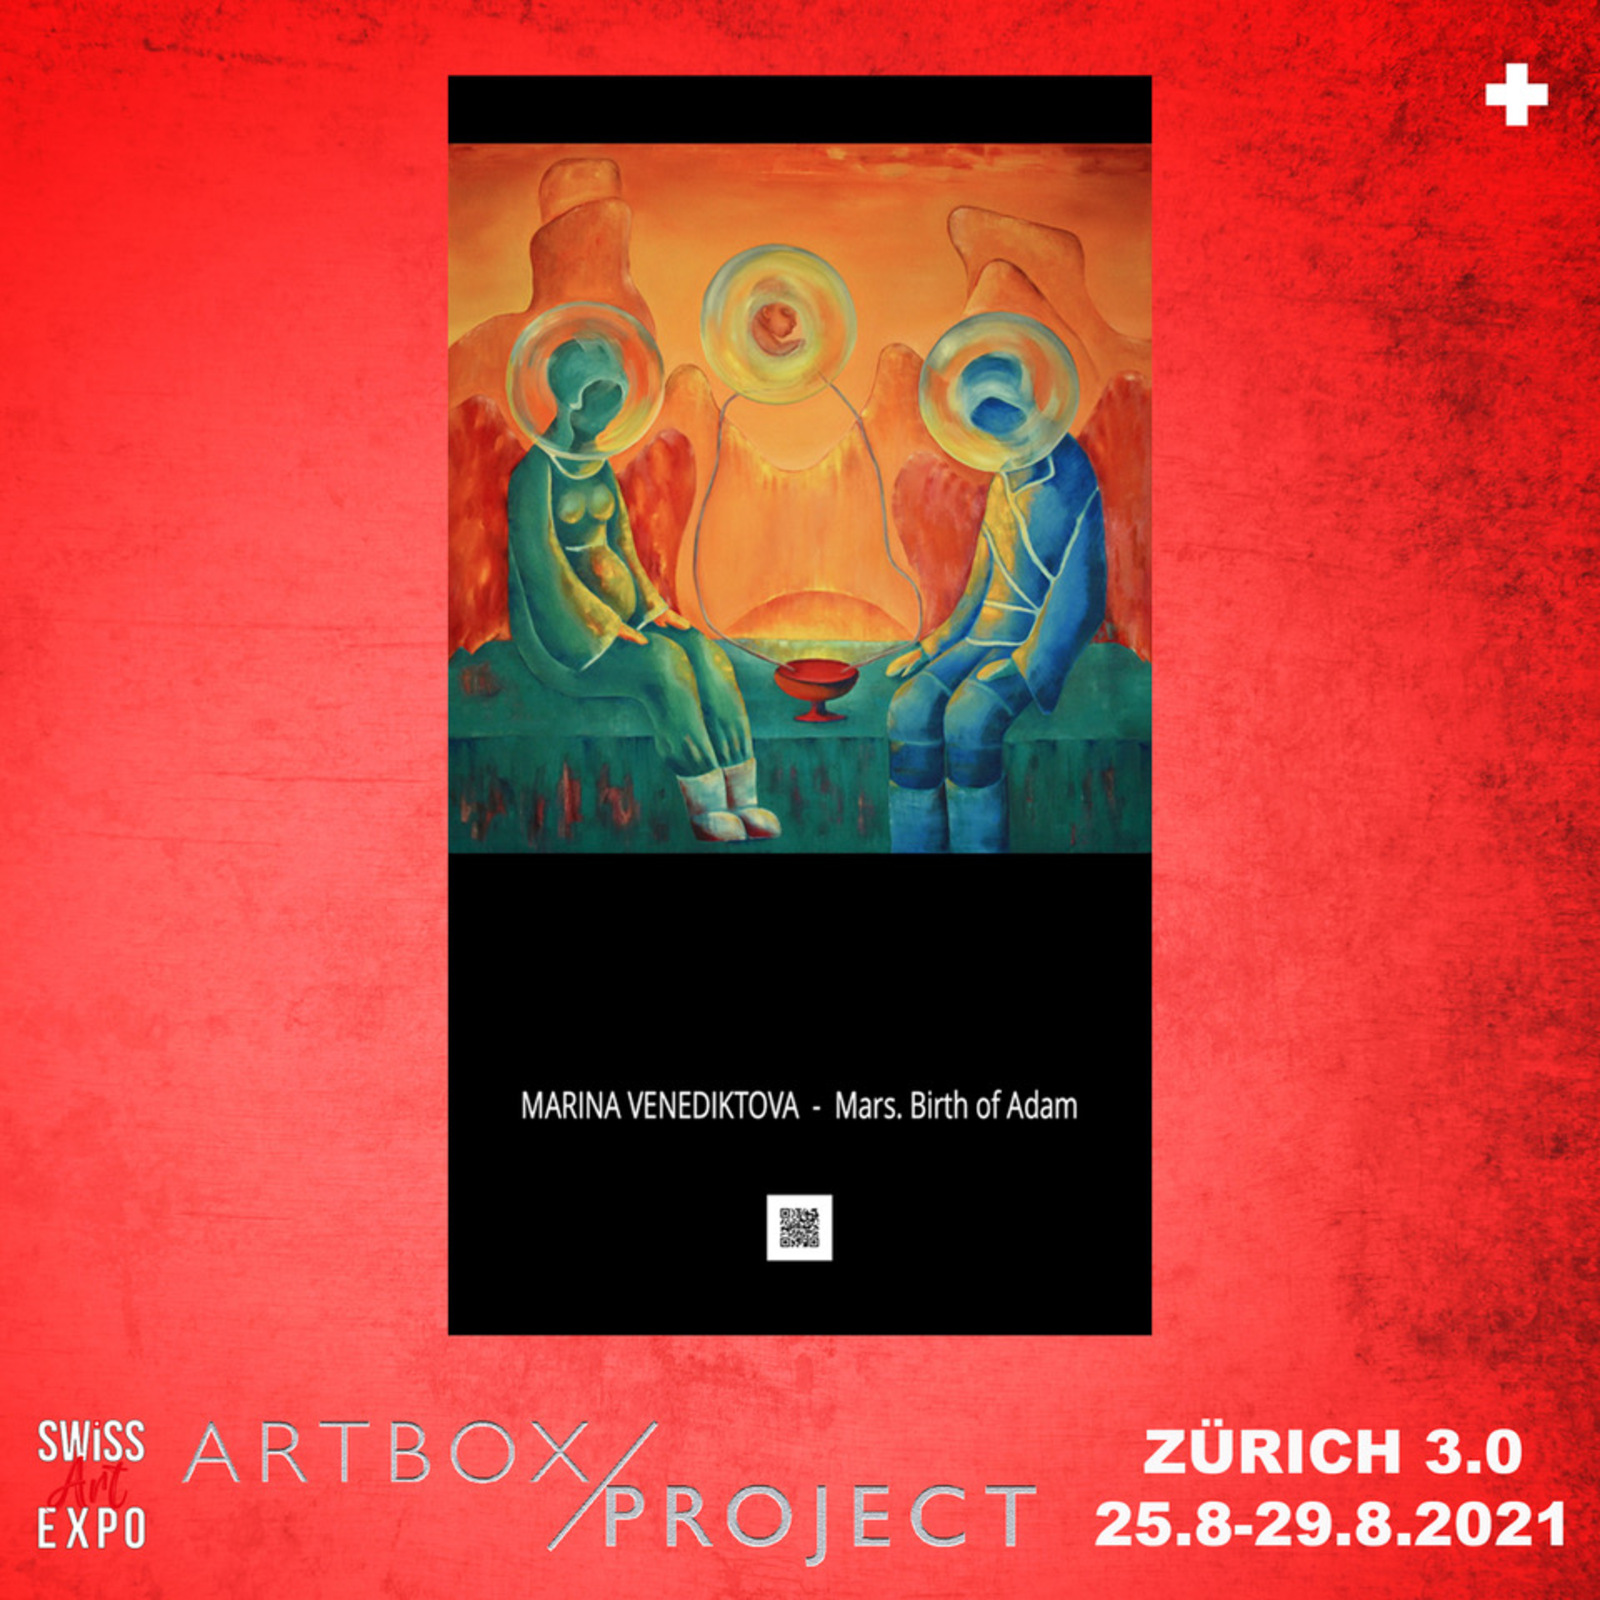 ARTBOX.PROJECT Zurich 3.0